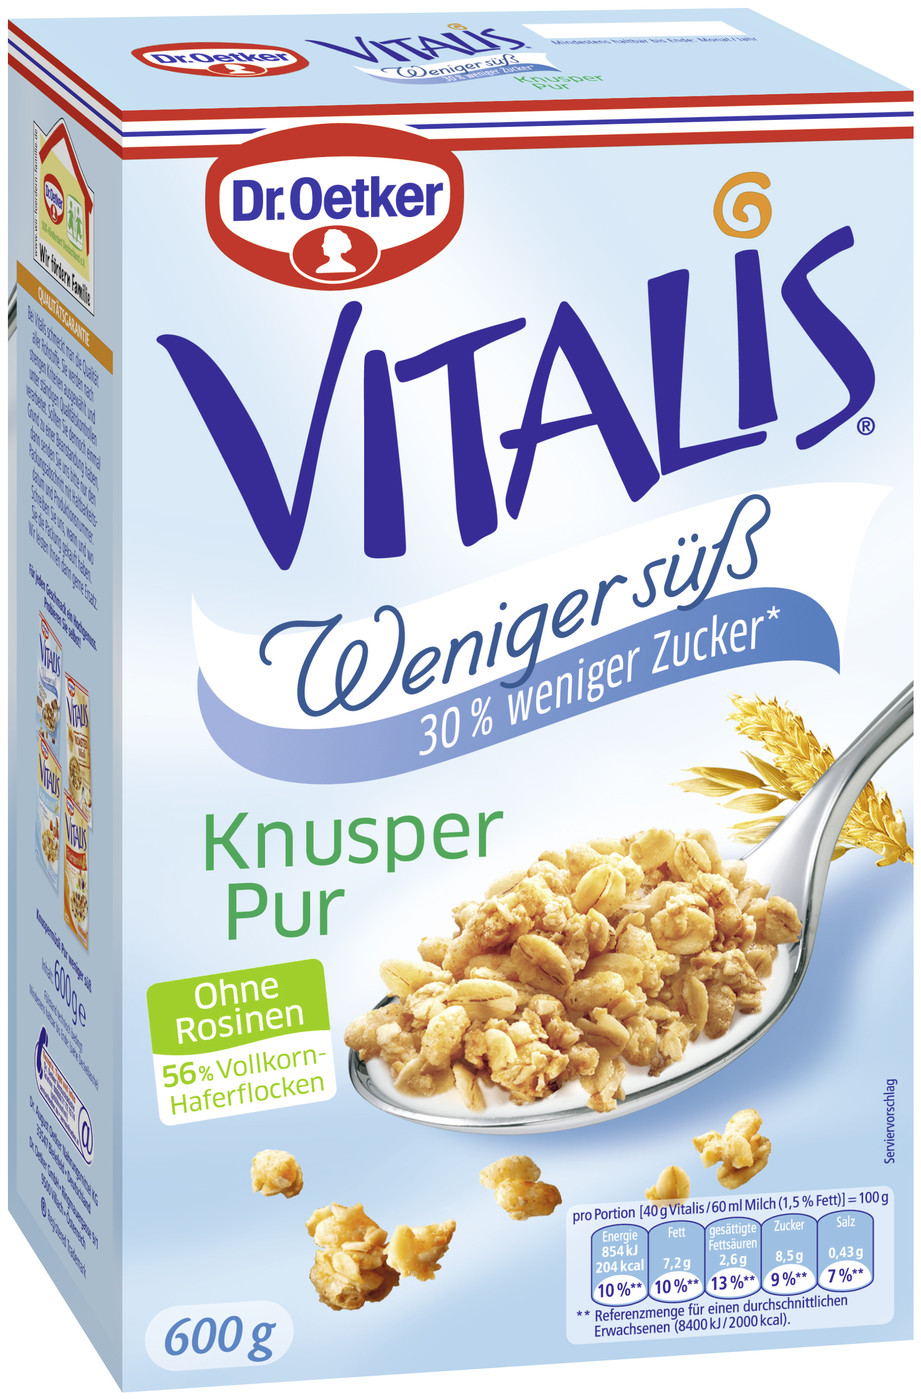 Dr.Oetker Vitalis Knusper pur 30% weniger Zucker 600G